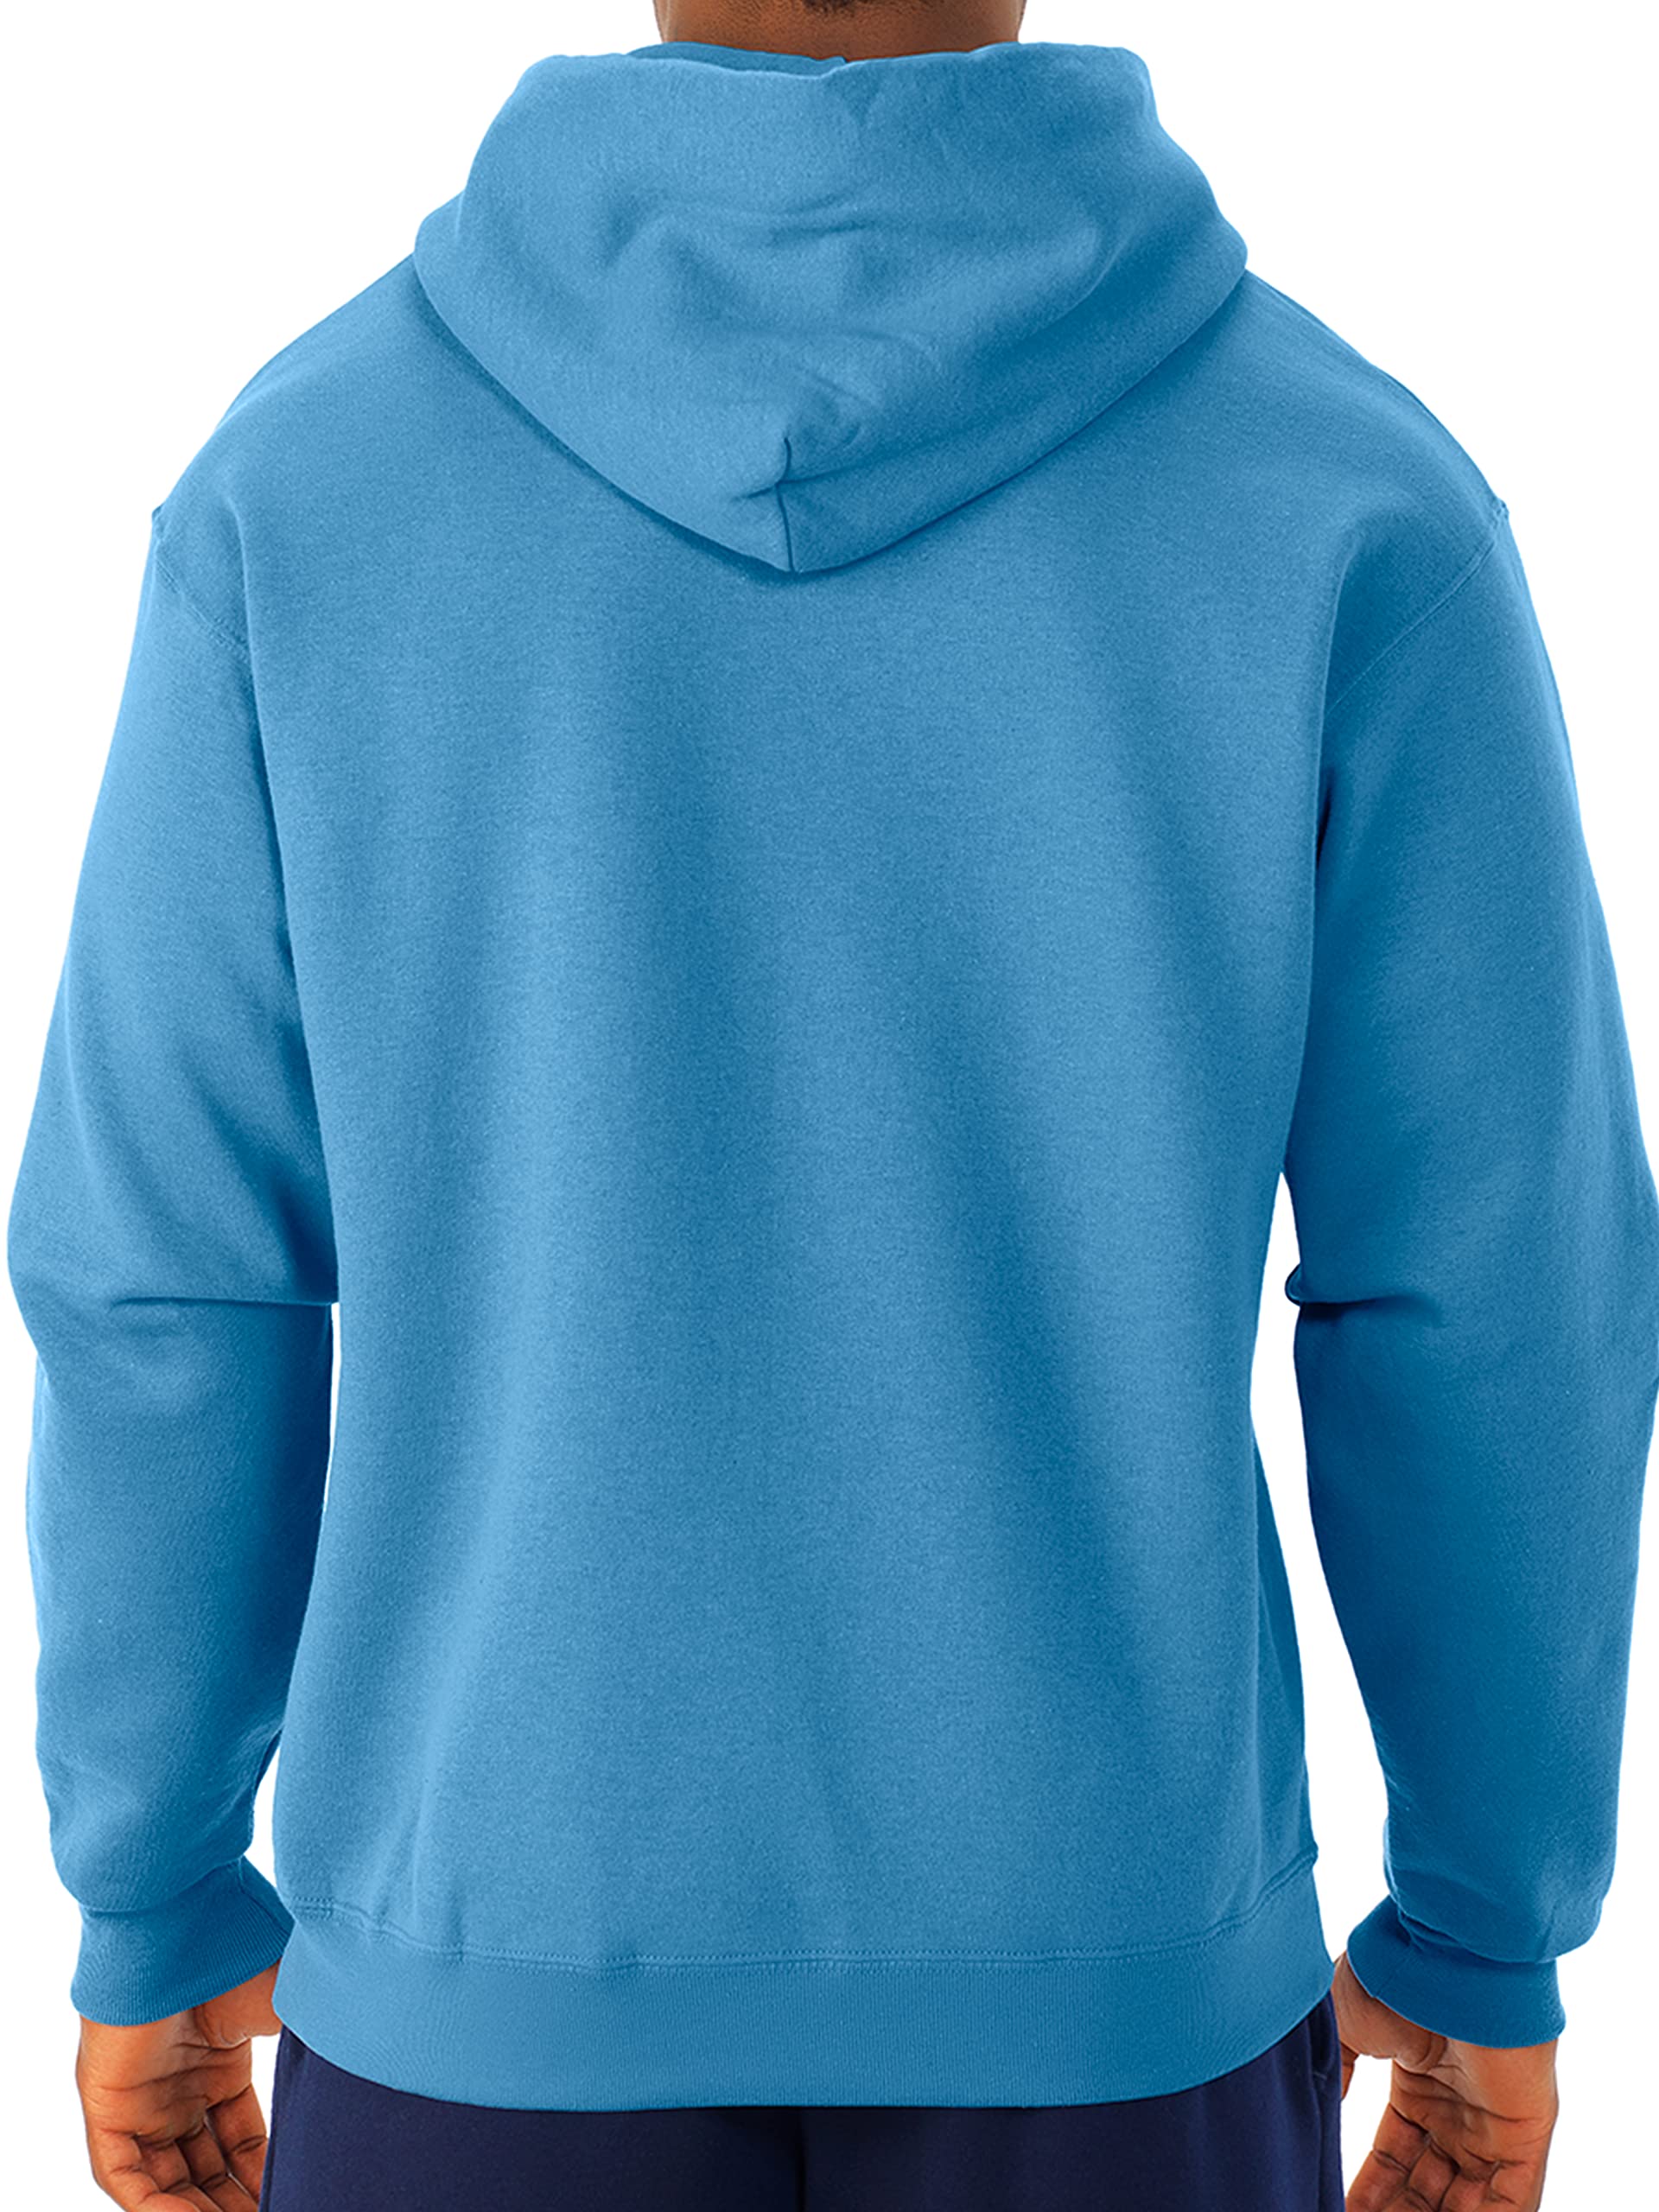 Jerzees Men’s NuBlend Hoodies & Sweatshirts (Retired Colors)